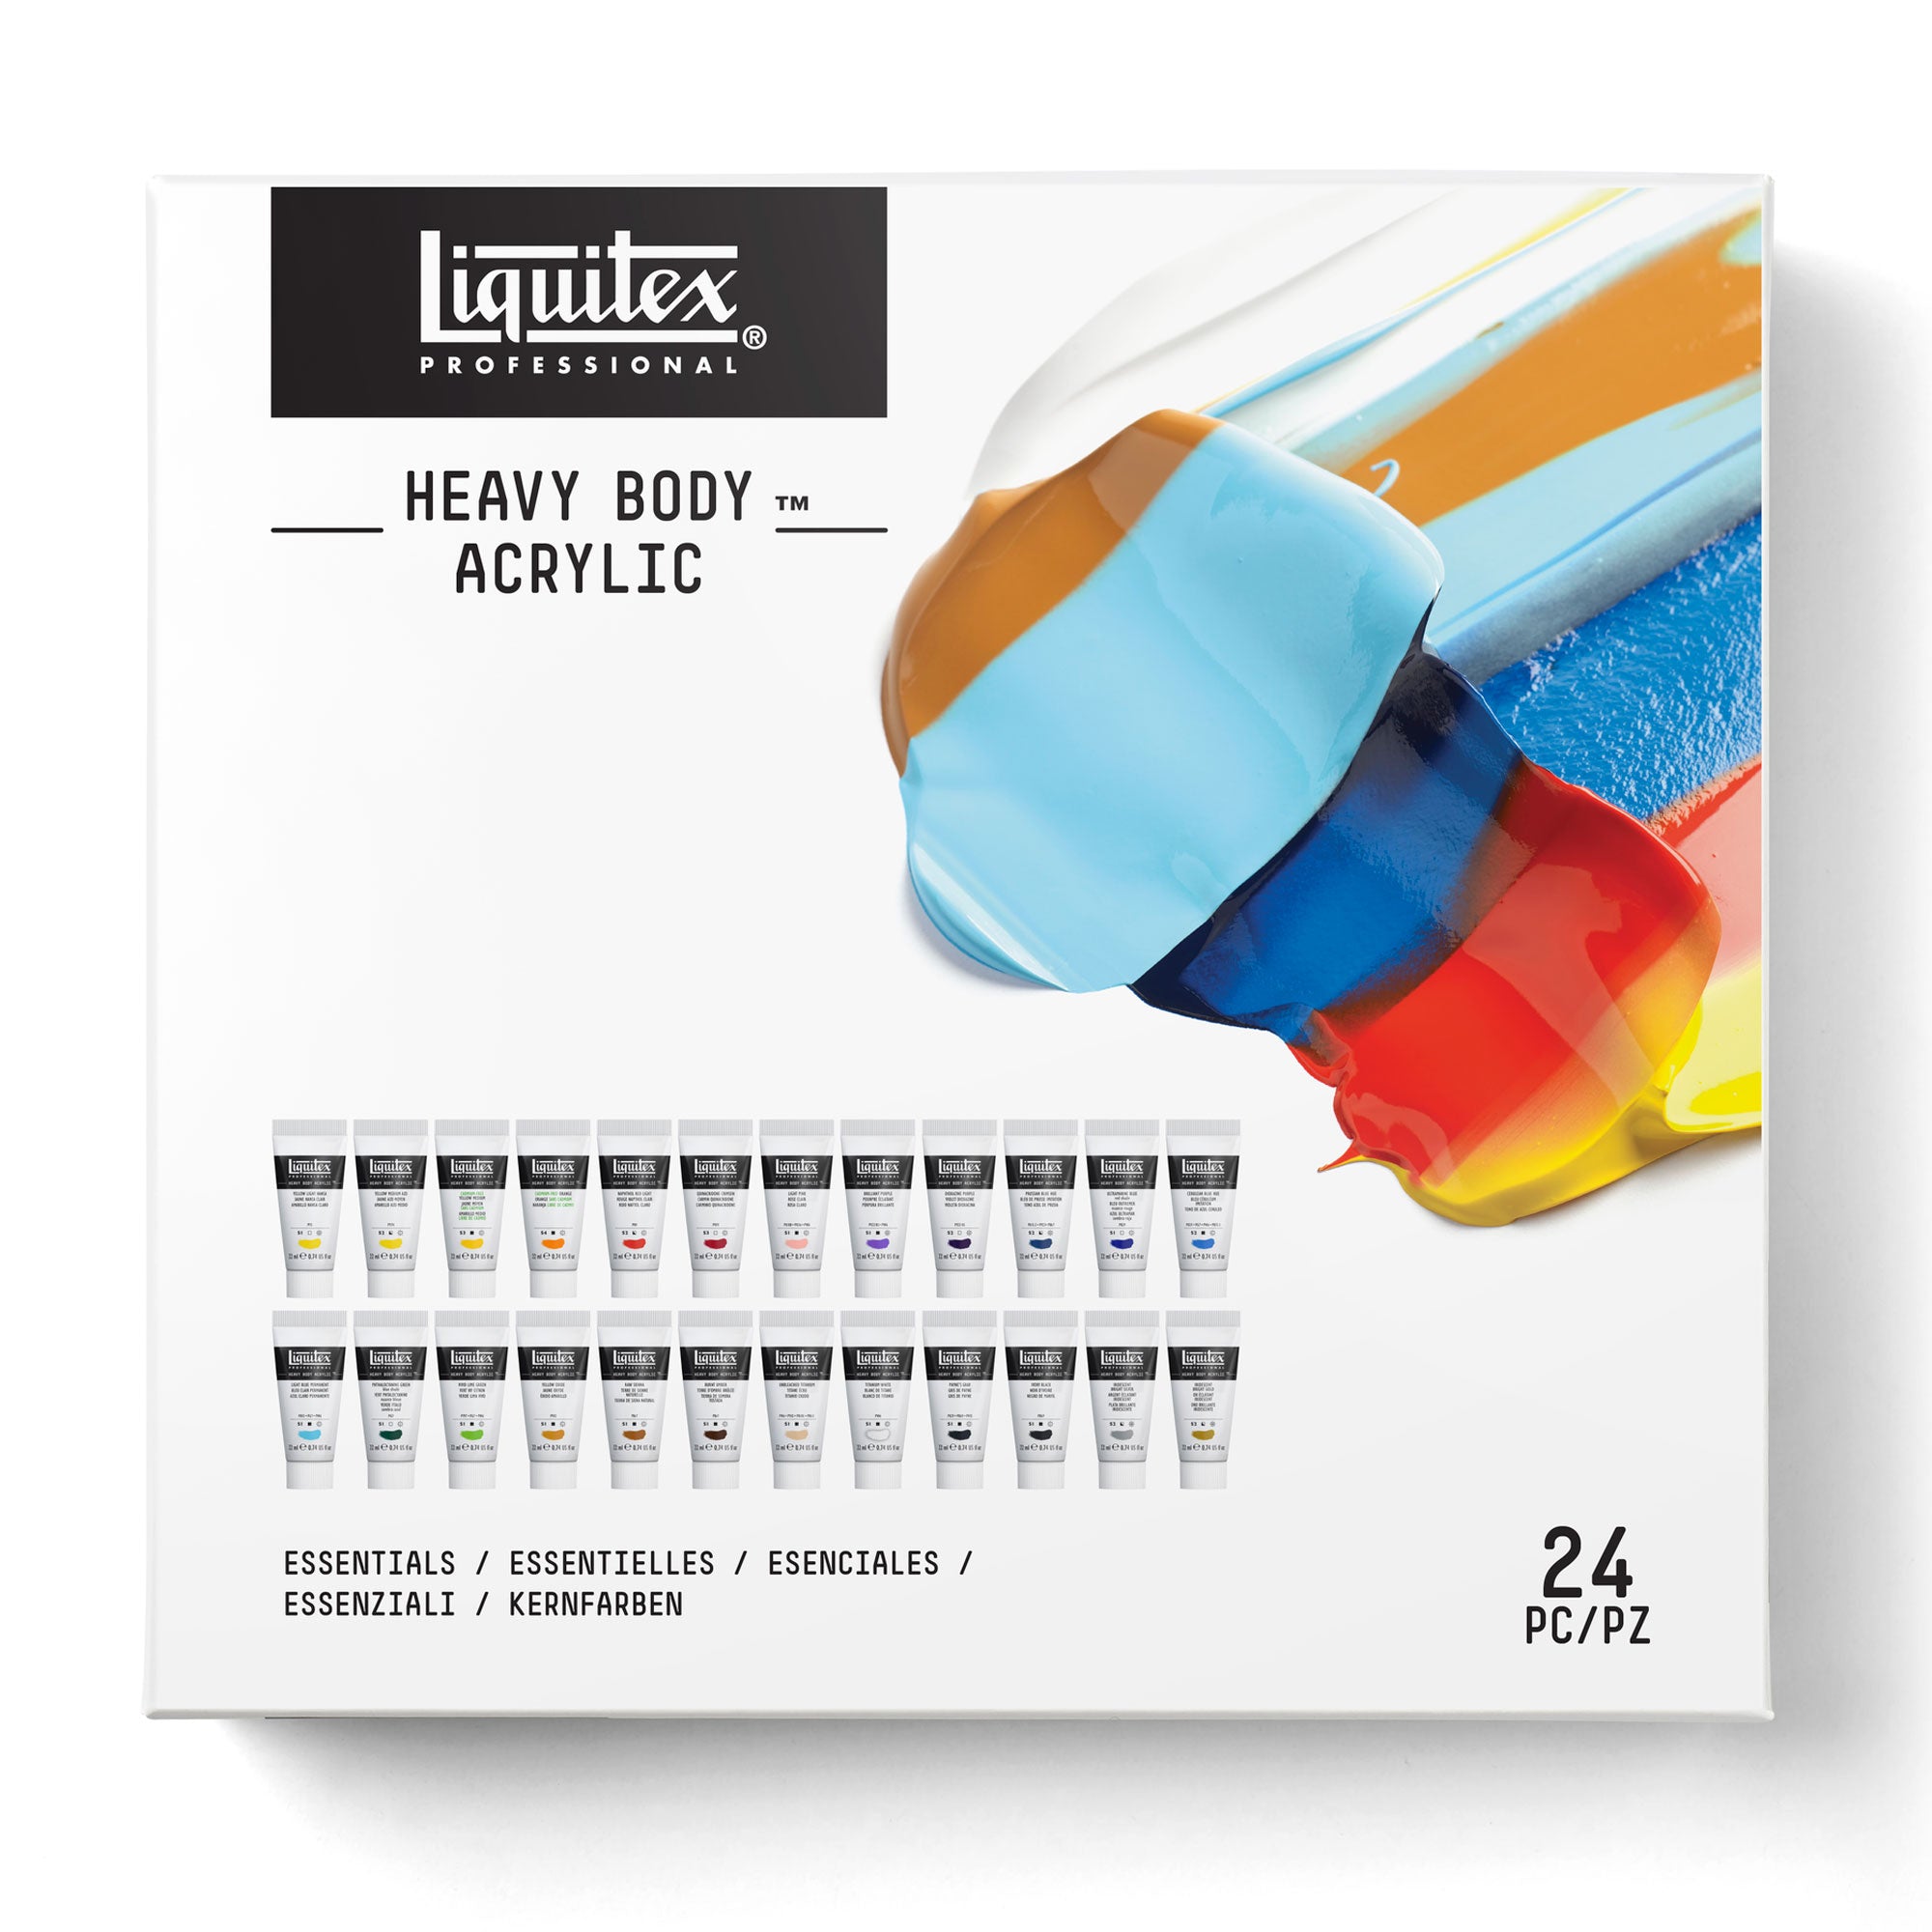 Liquitex Heavy Body Acrylic Essentials Set 24 x 22ml- Includes Complimentary Artists Apron